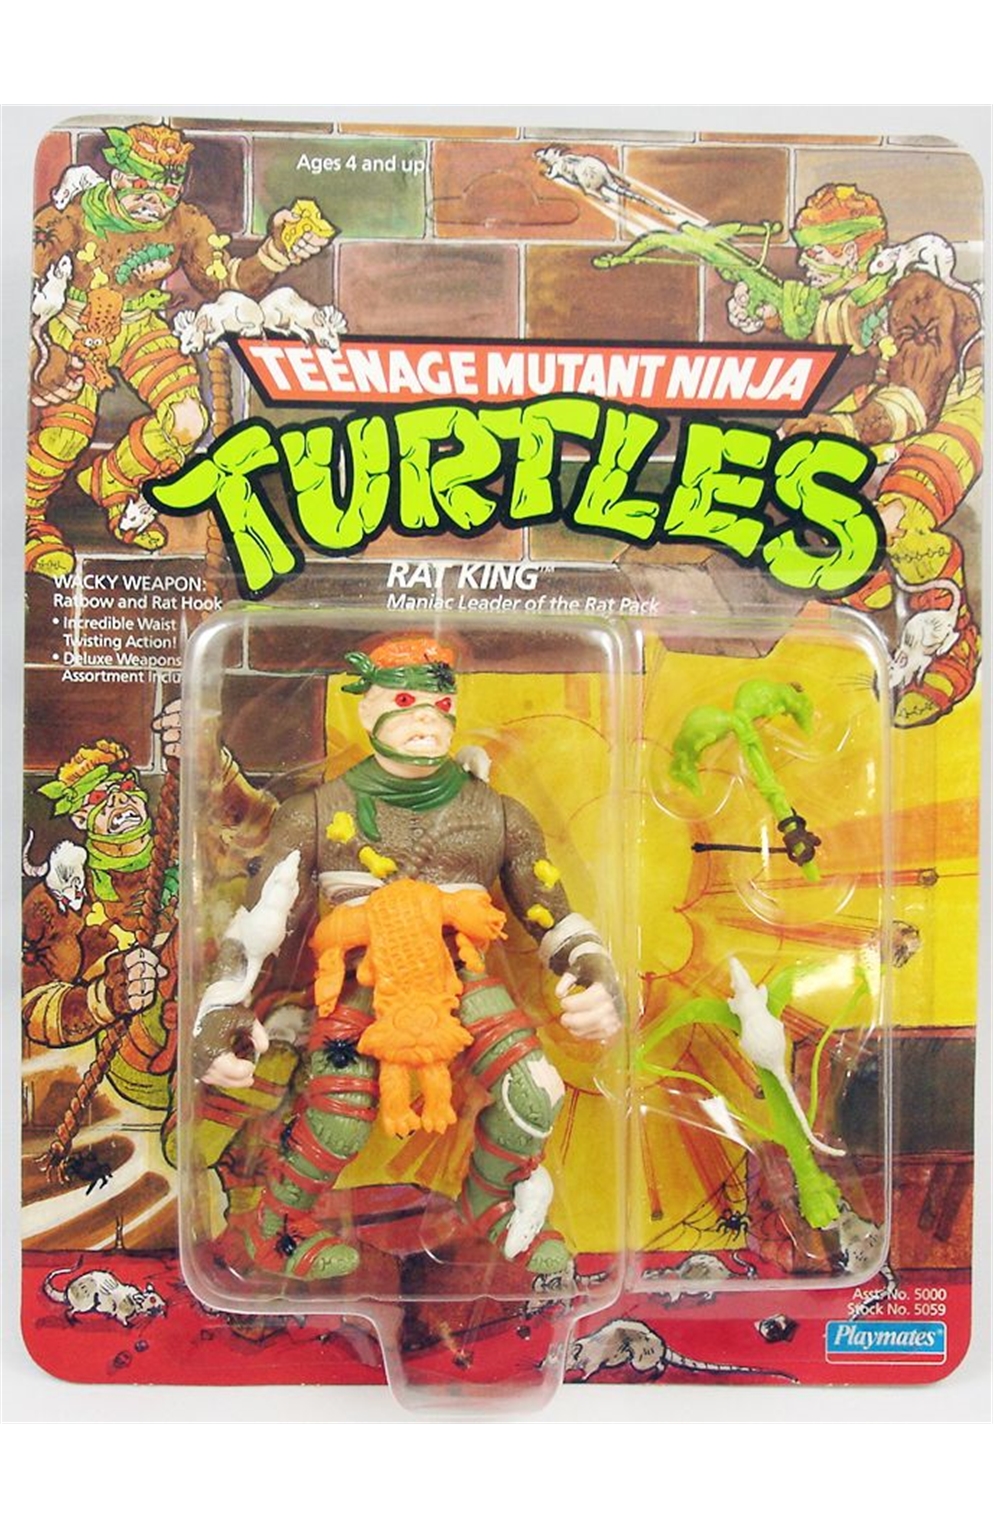 Action Figure Review: Rat King from Teenage Mutant Ninja Turtles